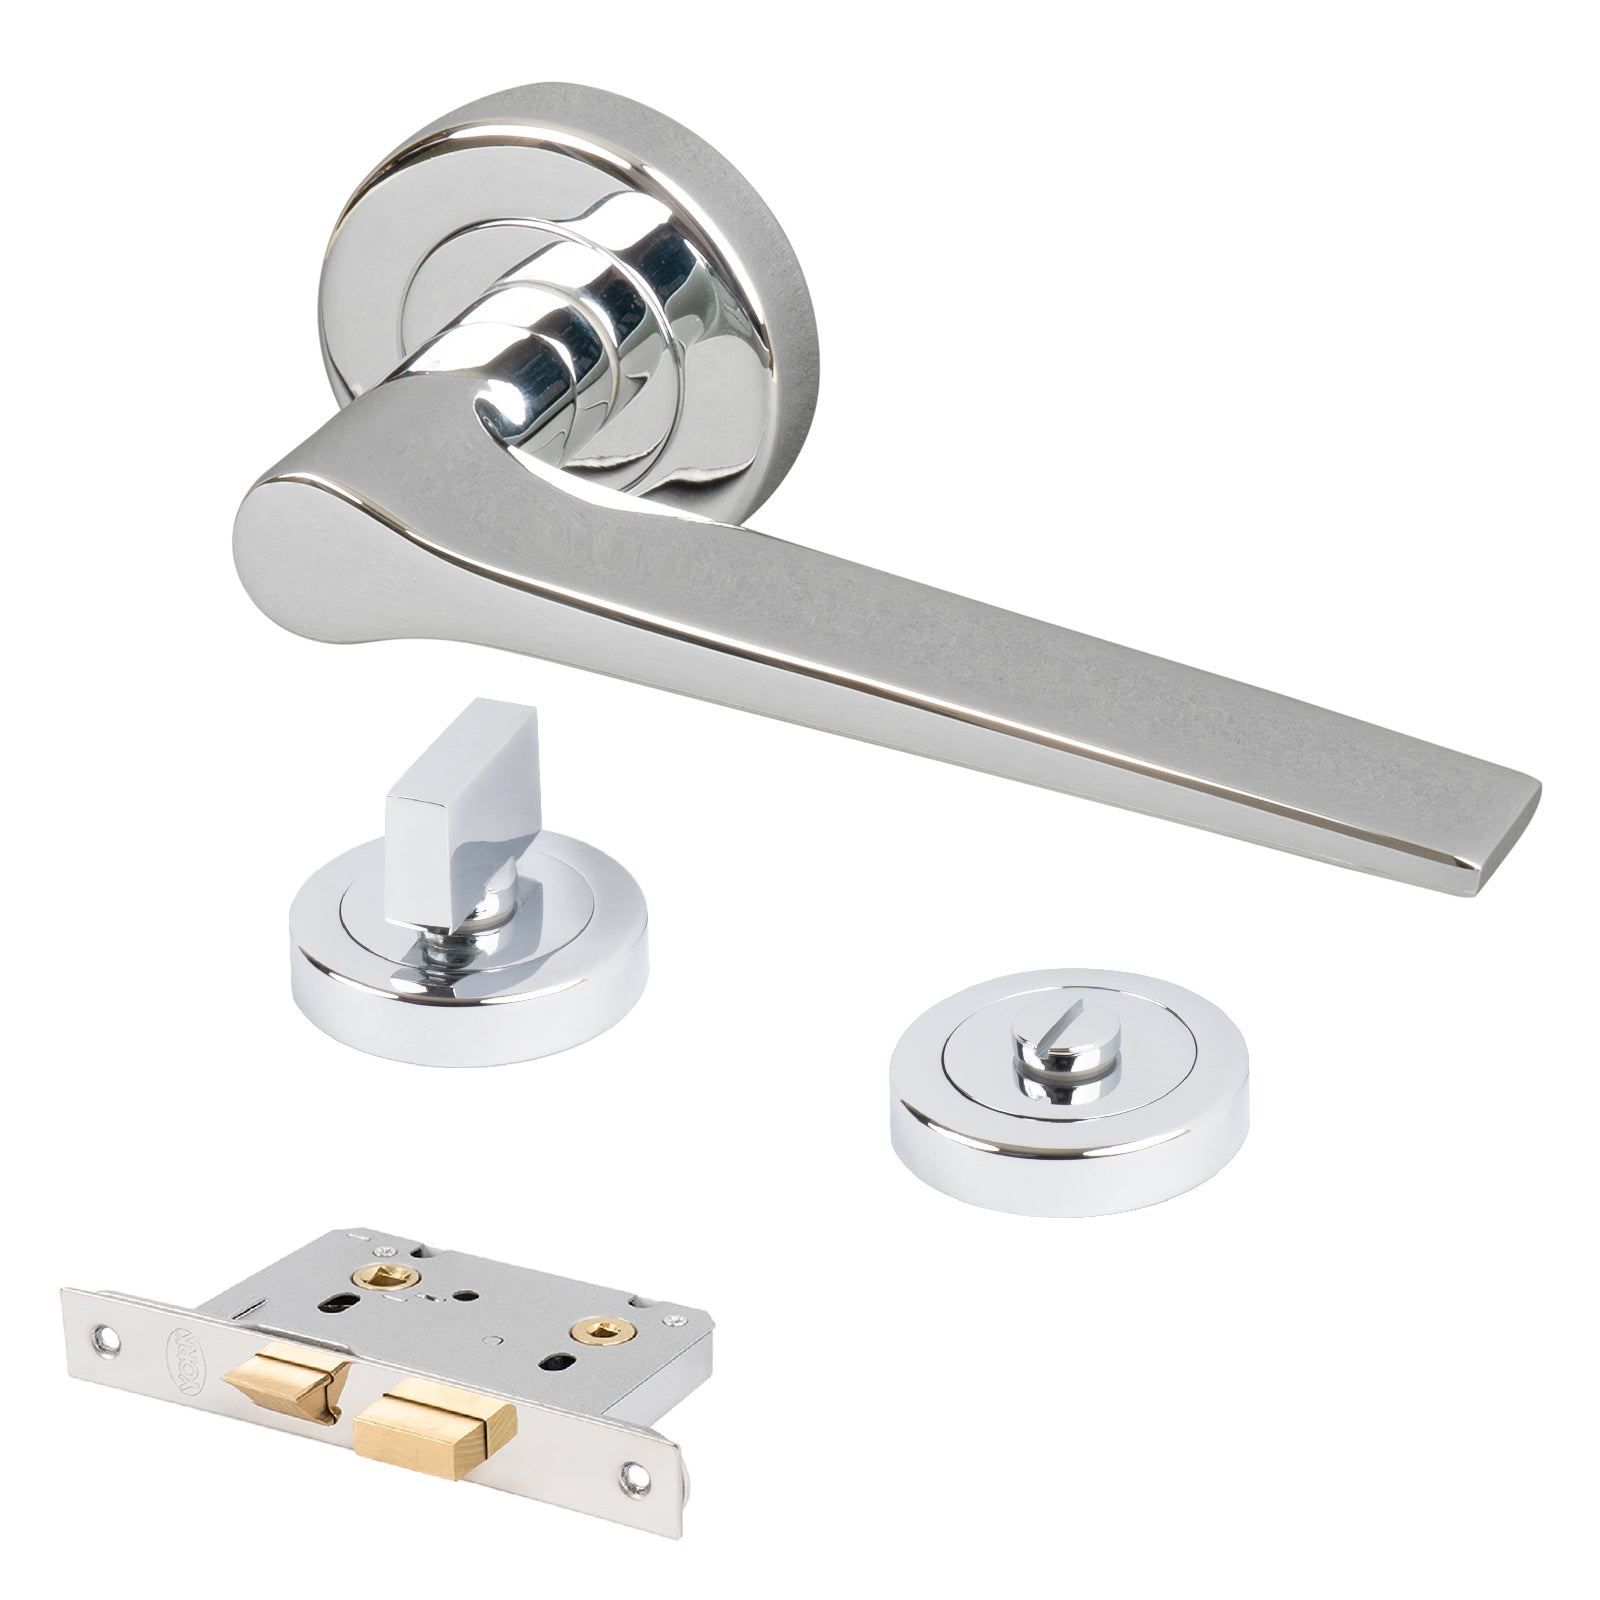 chrome Gio round rose door handles bathroom latch lock set